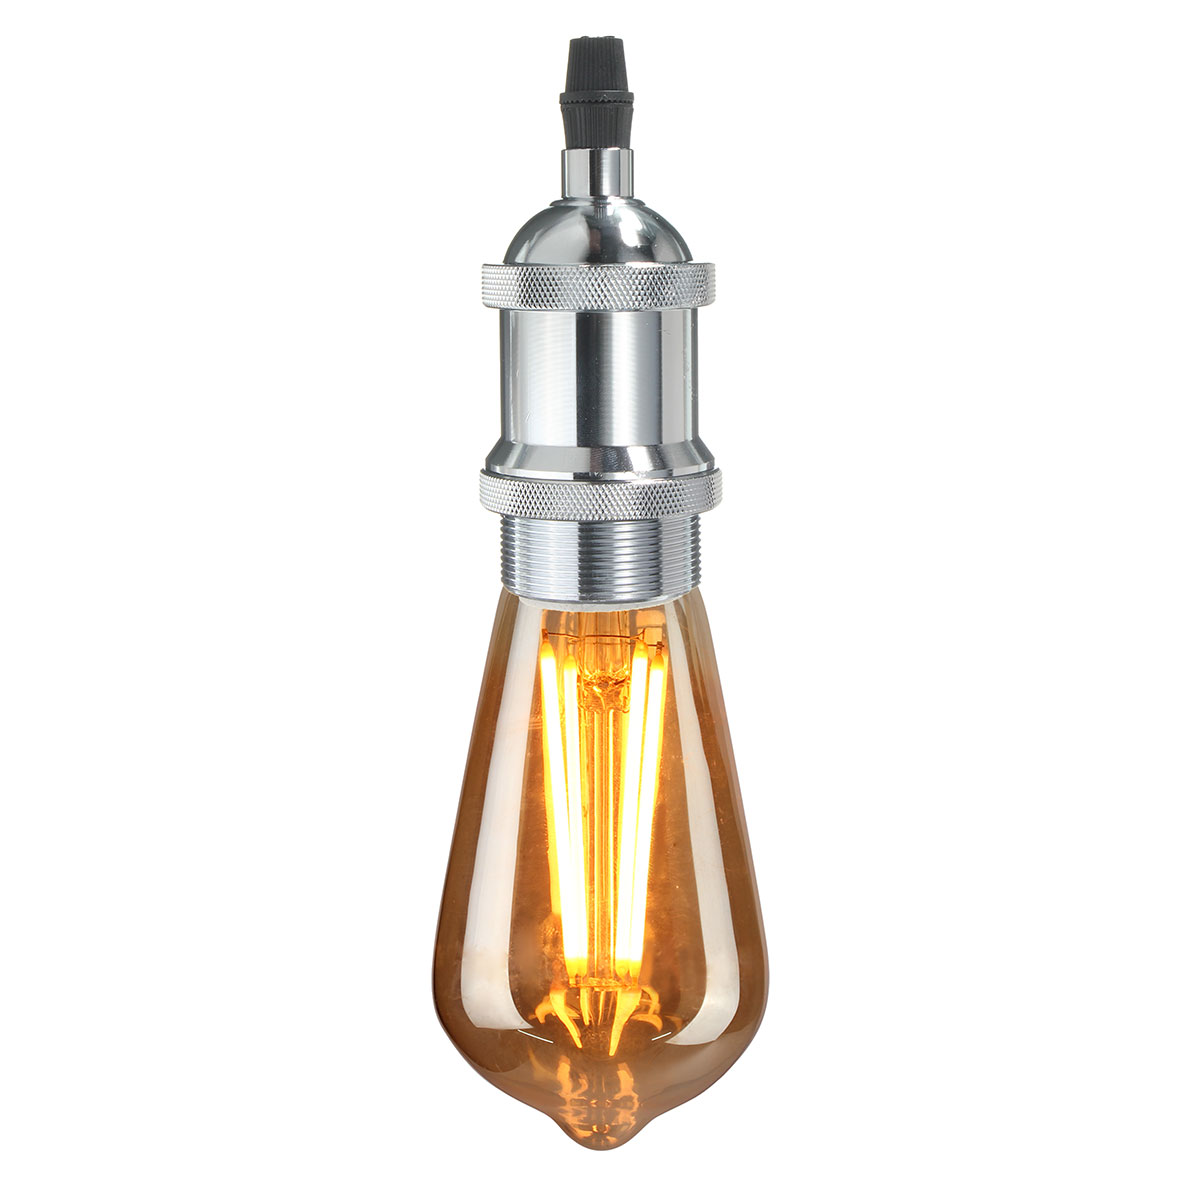 Find 110V-220V E26/E27 Bulb Adapter Copper Light Vintage Holder Retro Lamp Socket for E27 Light Bulb for Sale on Gipsybee.com with cryptocurrencies